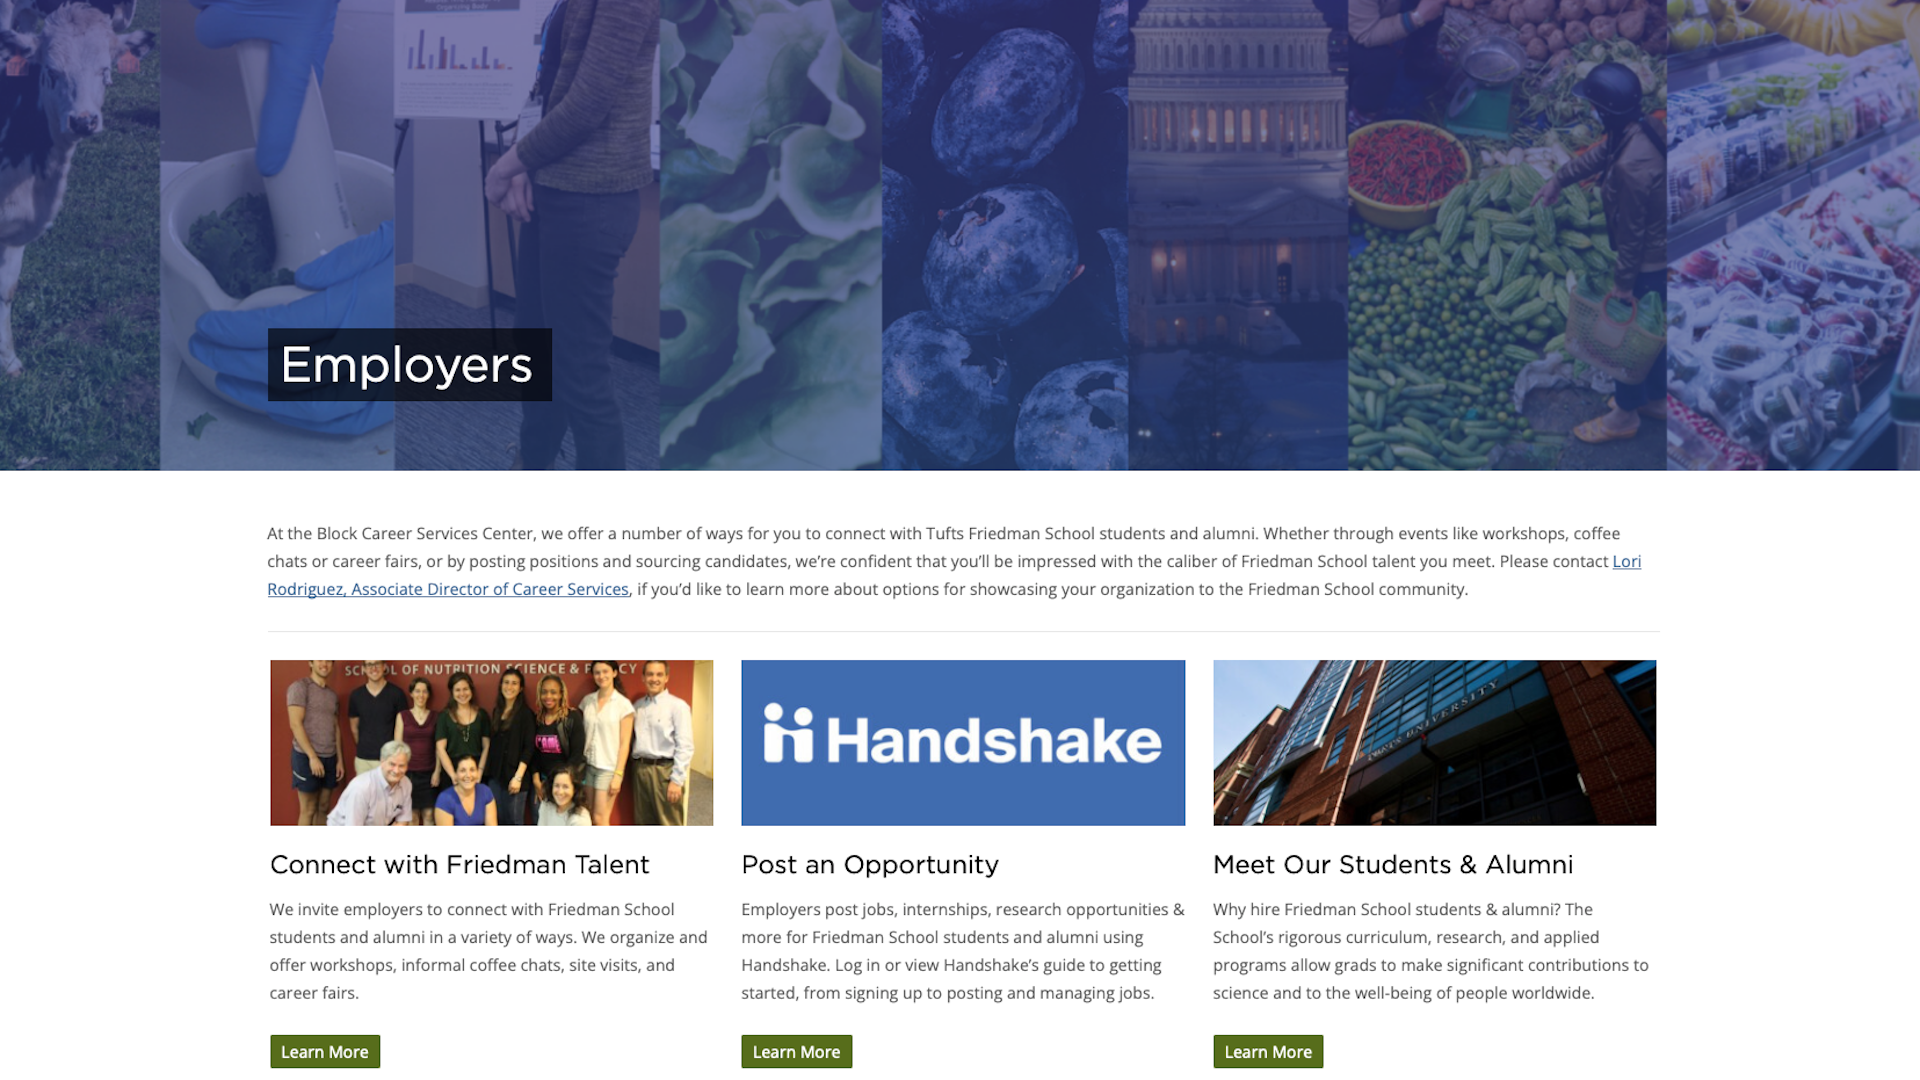 a screenshot of the new career services center website